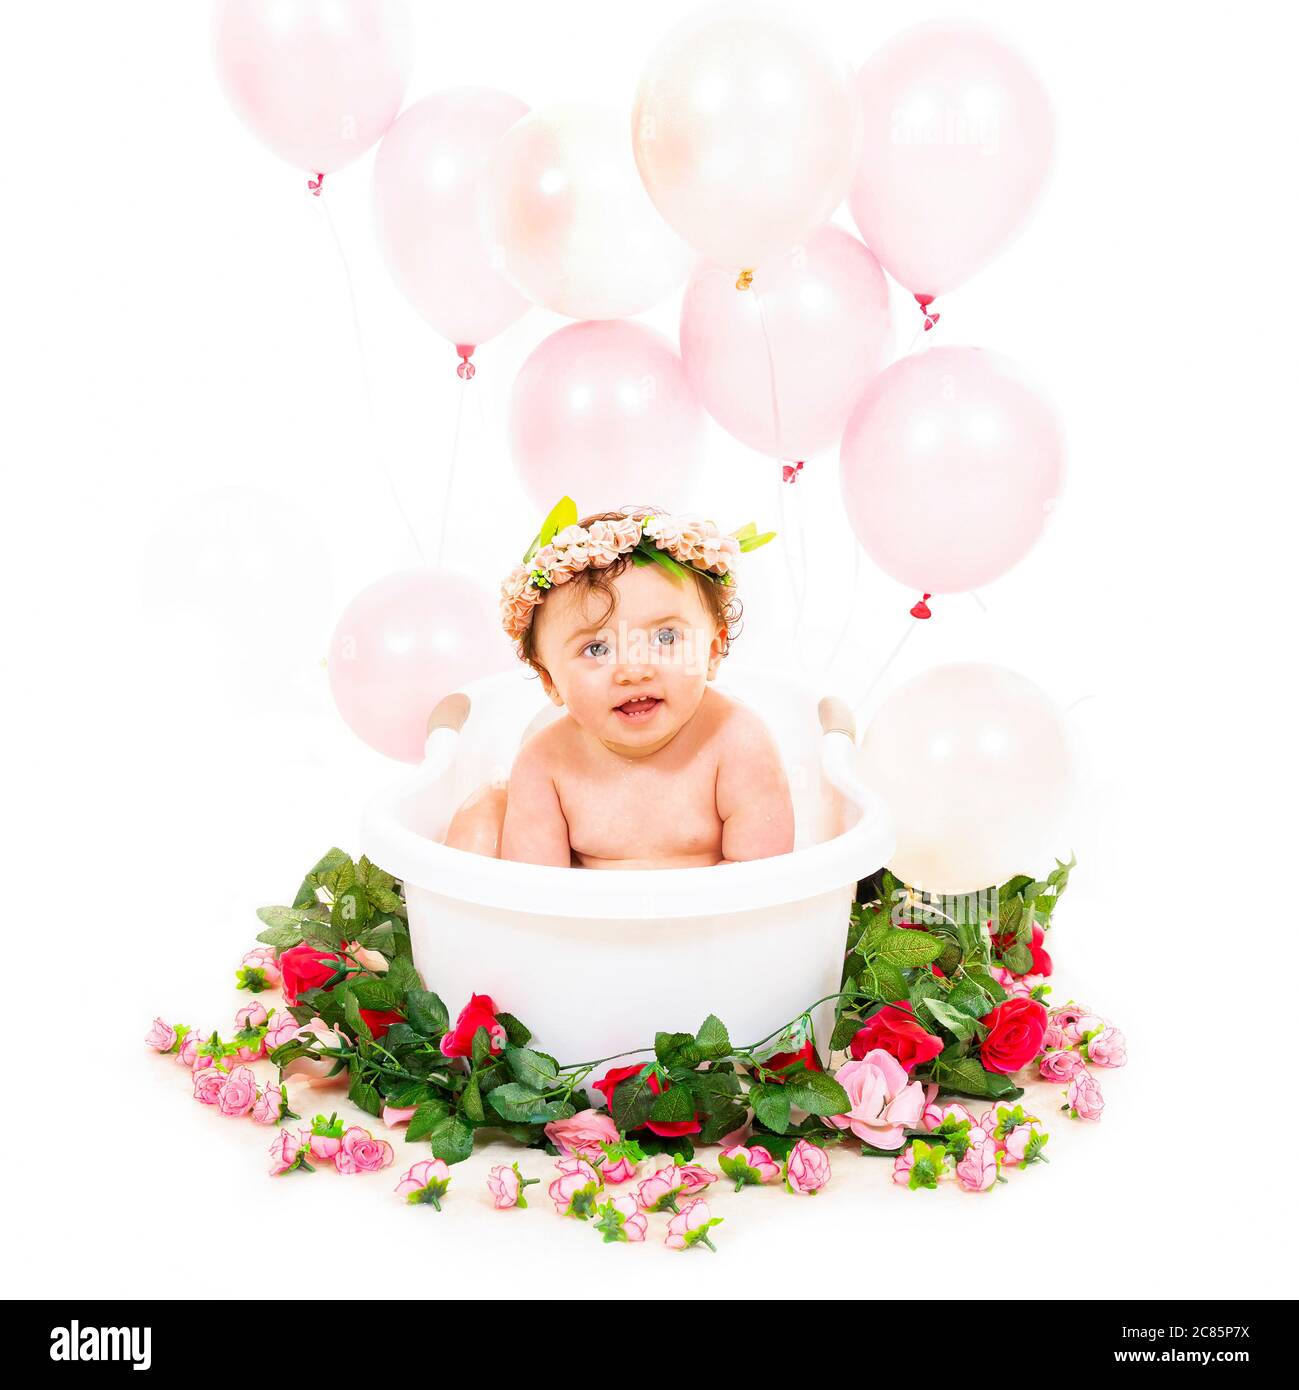 Square lifestyle portrait of a baby girl enjoying bath time. Stock Photo